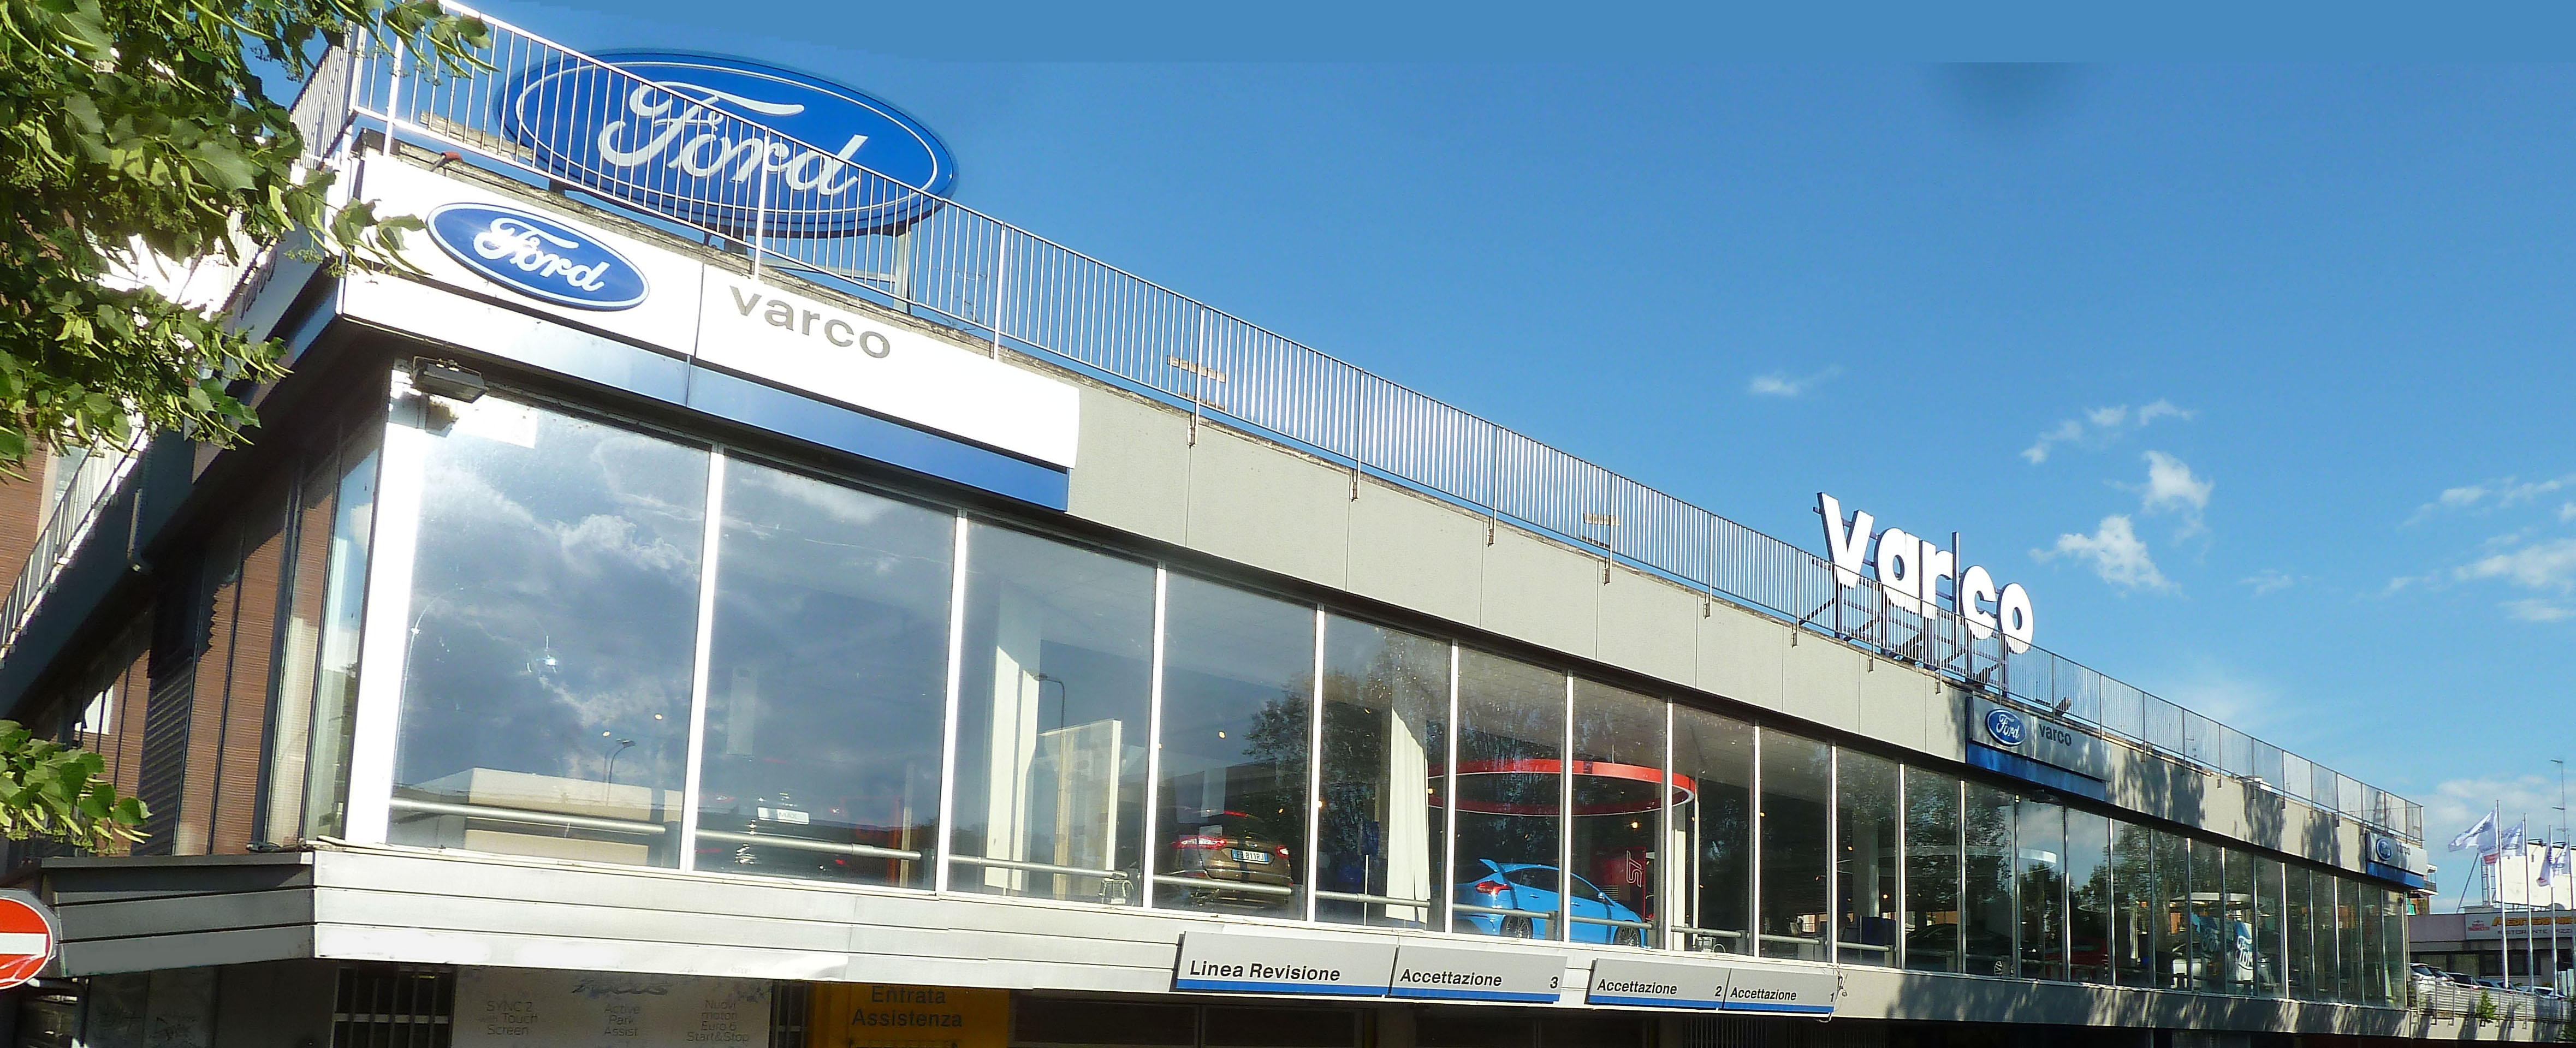 Varco Concessionaria Ford Milano -Mach-E, Kuga, Focus, Fiesta, Transit